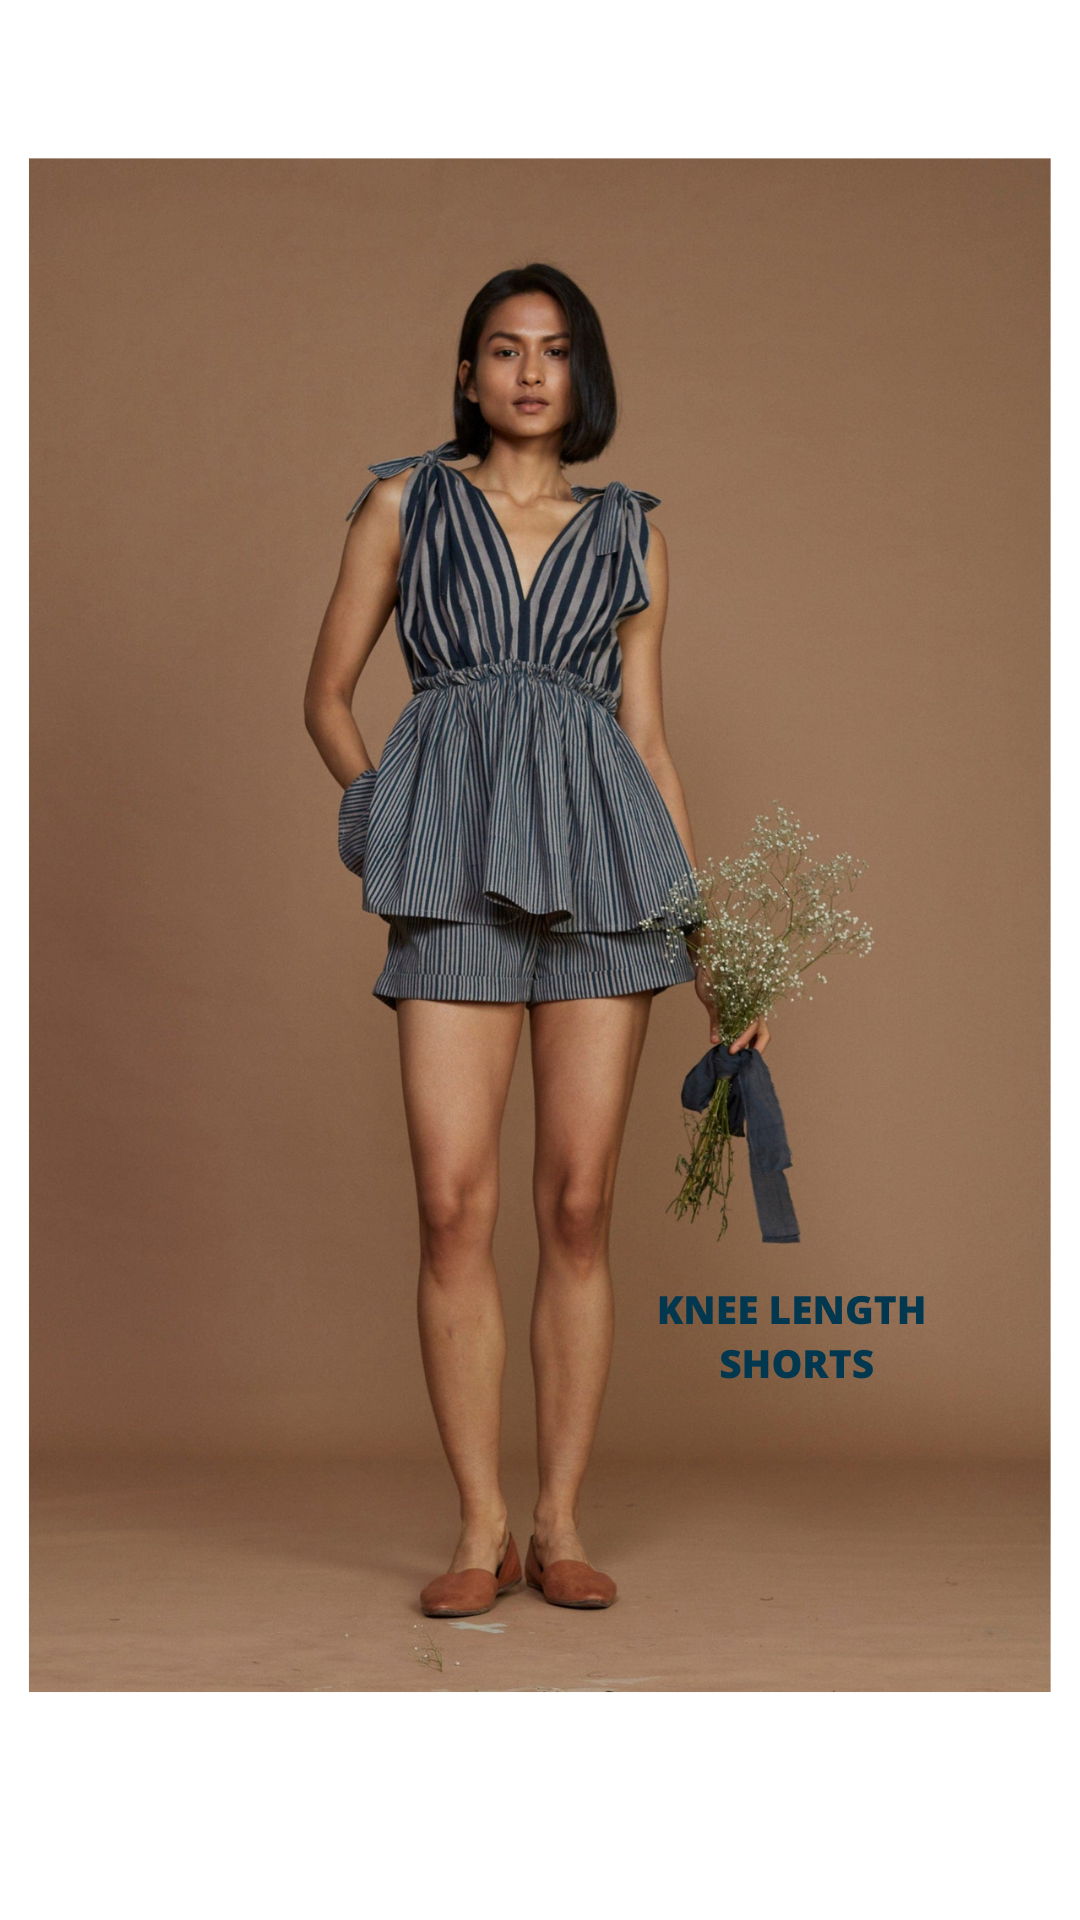 Mati Frill Top & Knee Length Shorts Co-Ord Set